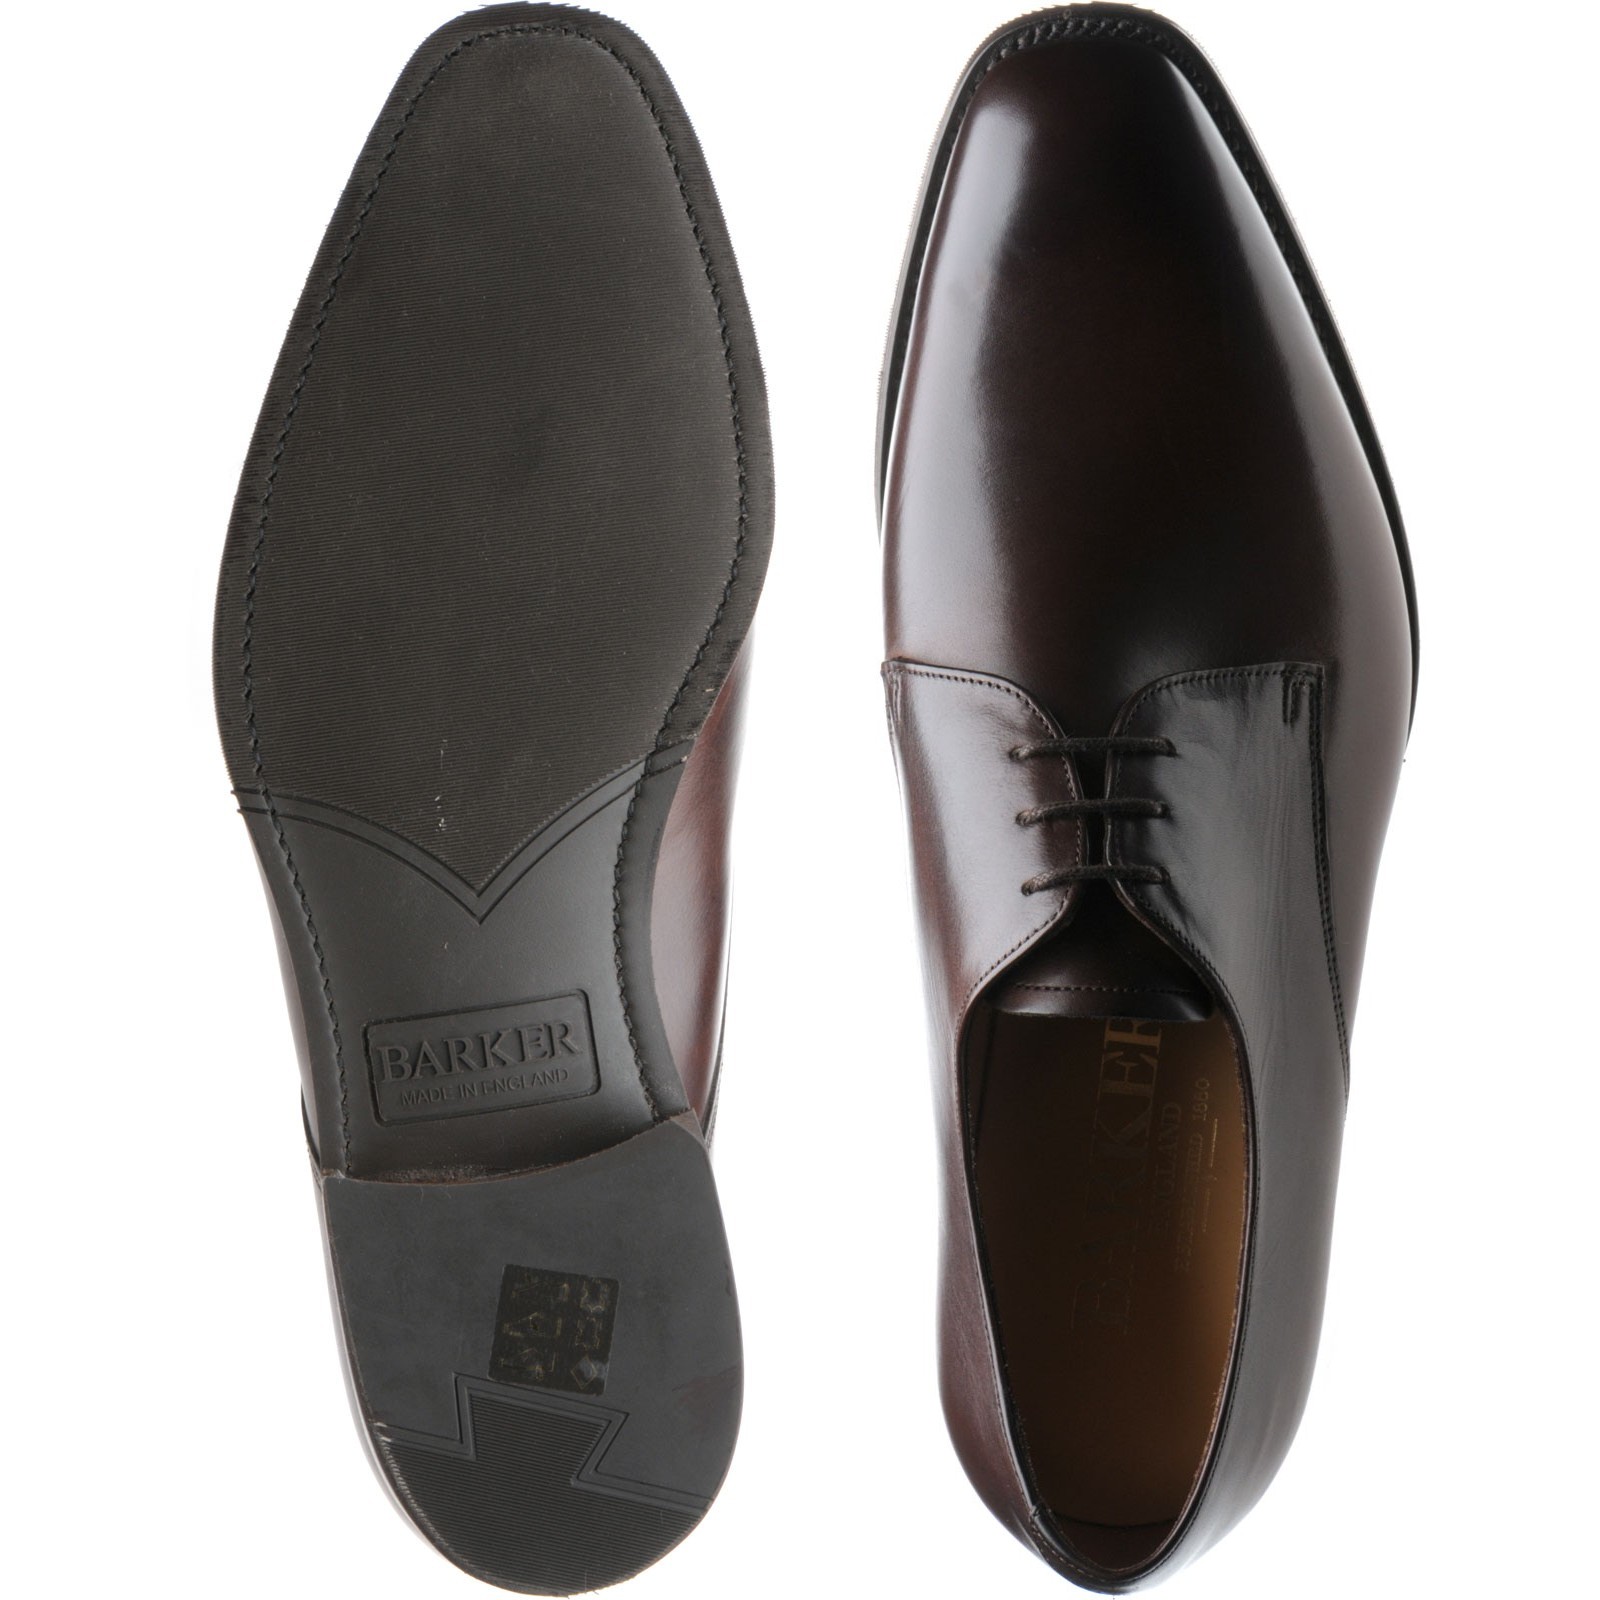 Barker shoes | Barker Professional | St Austell rubber-soled Derby ...